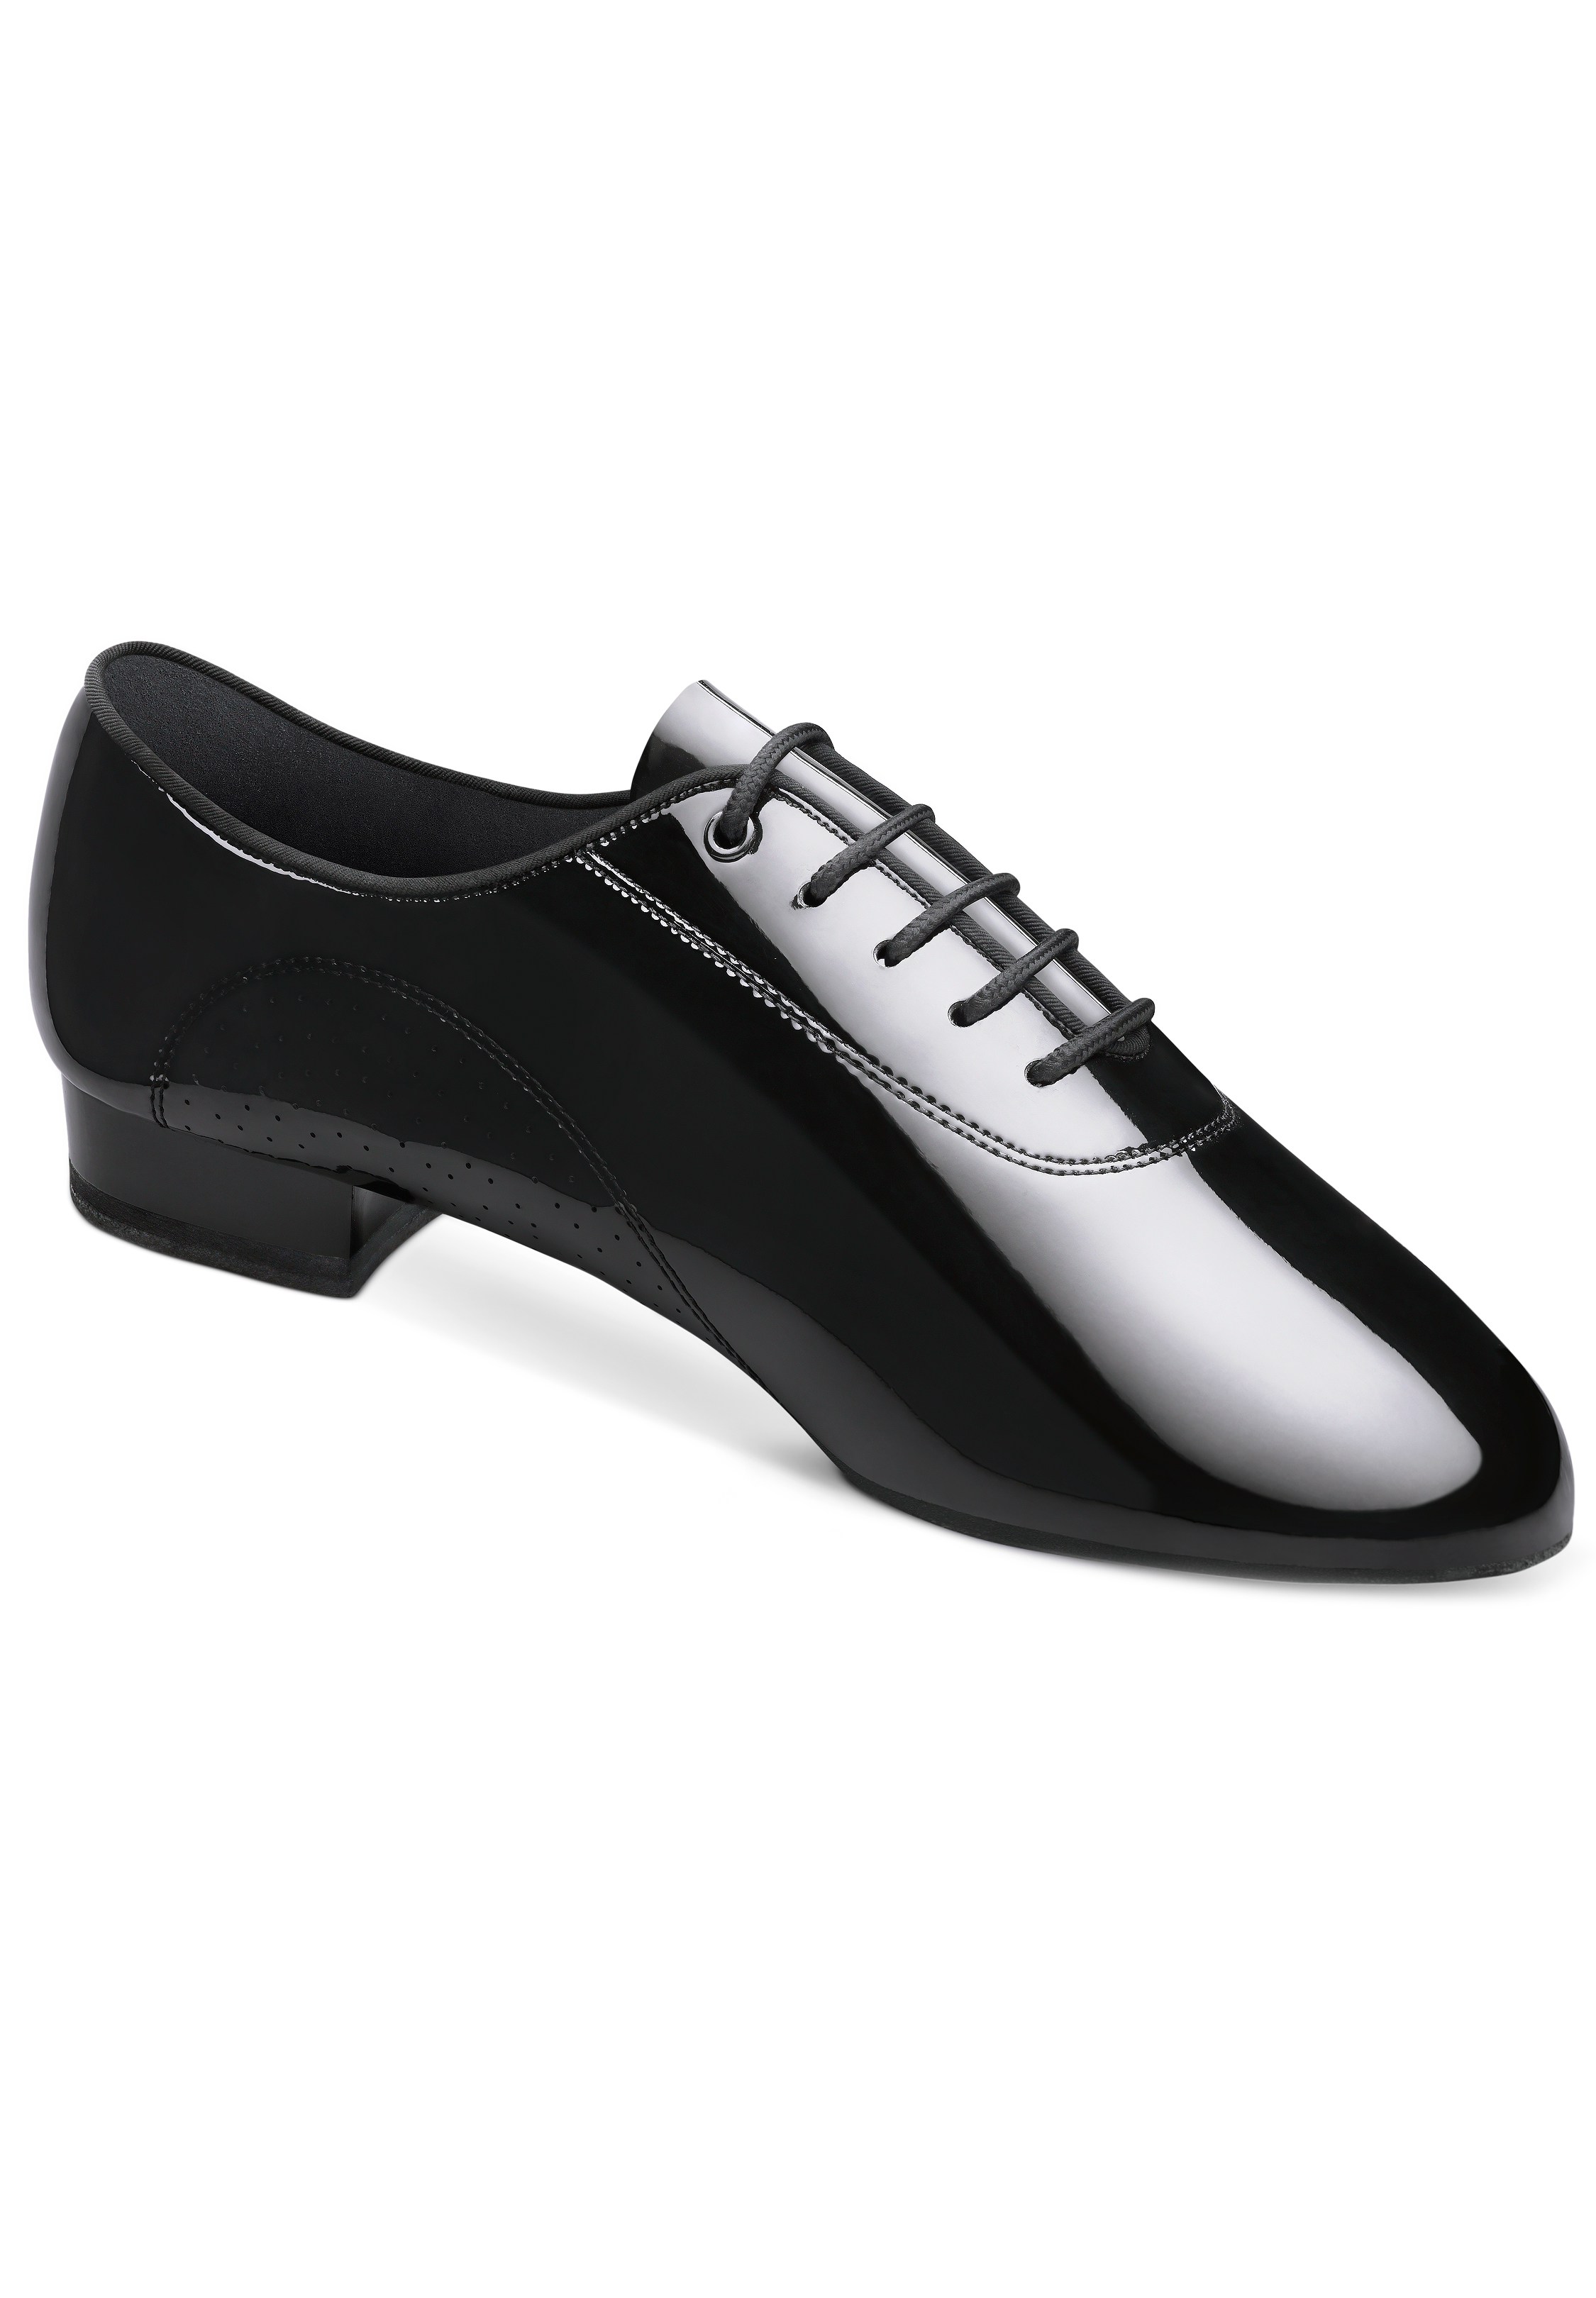 Mens Black Ballroom Latin Performance Shoes Waltz Modern Dancing Practice Shoe 